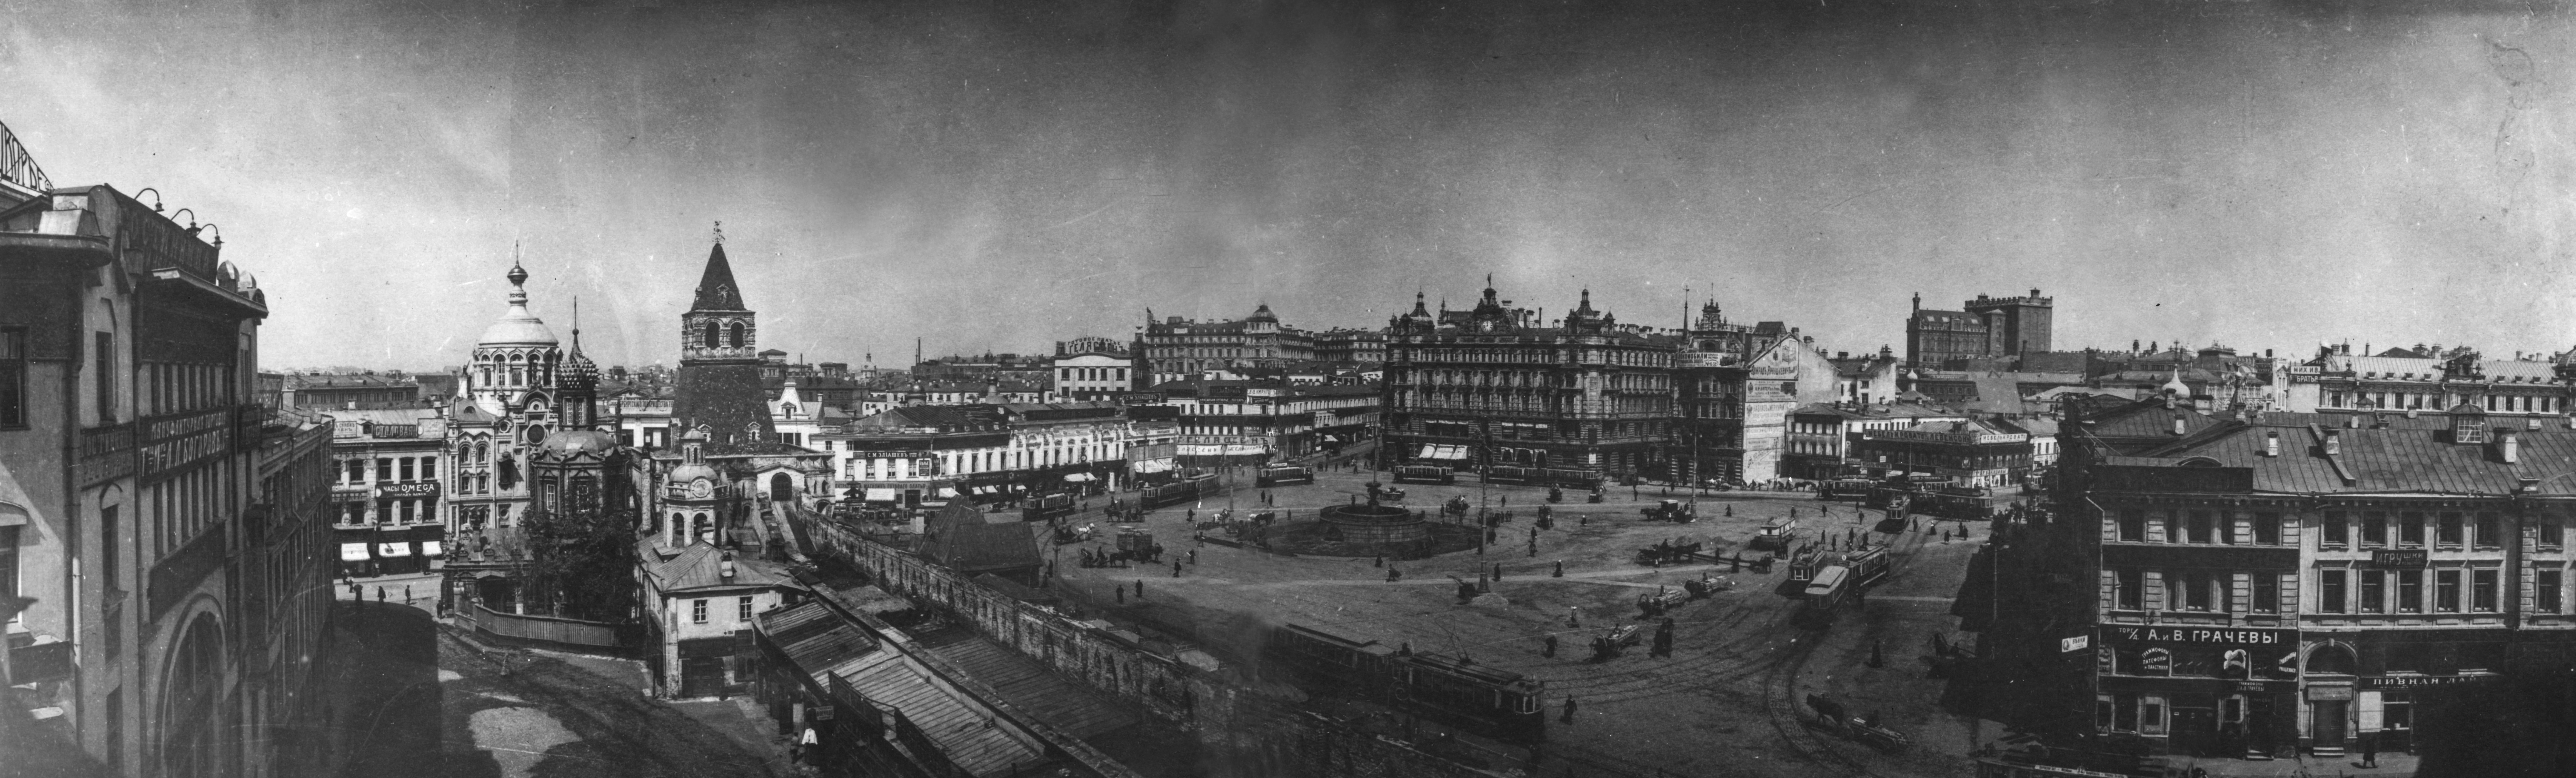 Панорама Лубянской площади